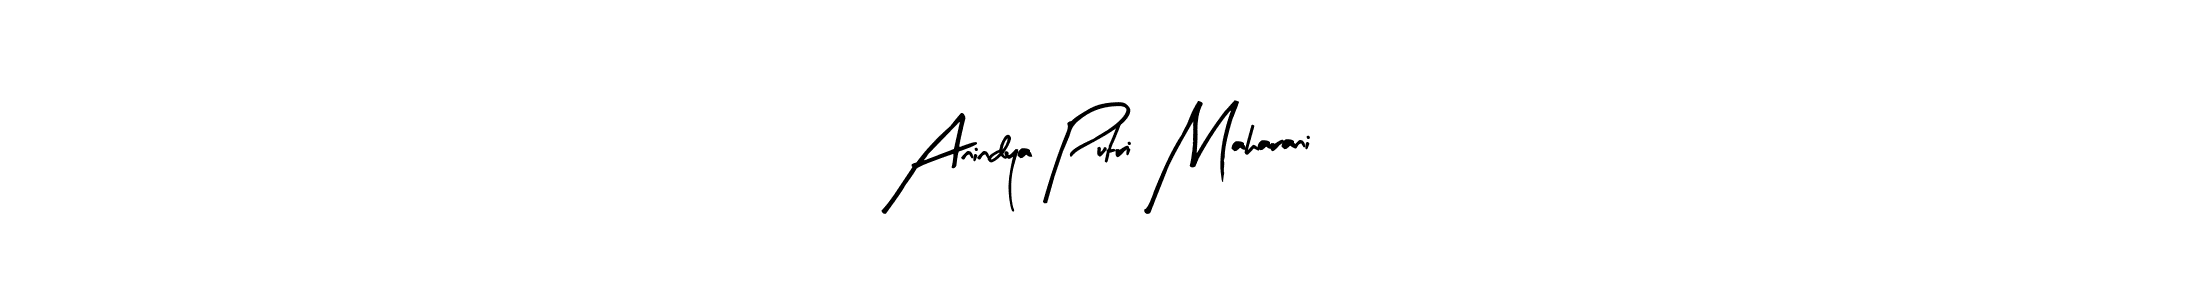 How to Draw Anindya Putri Maharani signature style? Arty Signature is a latest design signature styles for name Anindya Putri Maharani. Anindya Putri Maharani signature style 8 images and pictures png